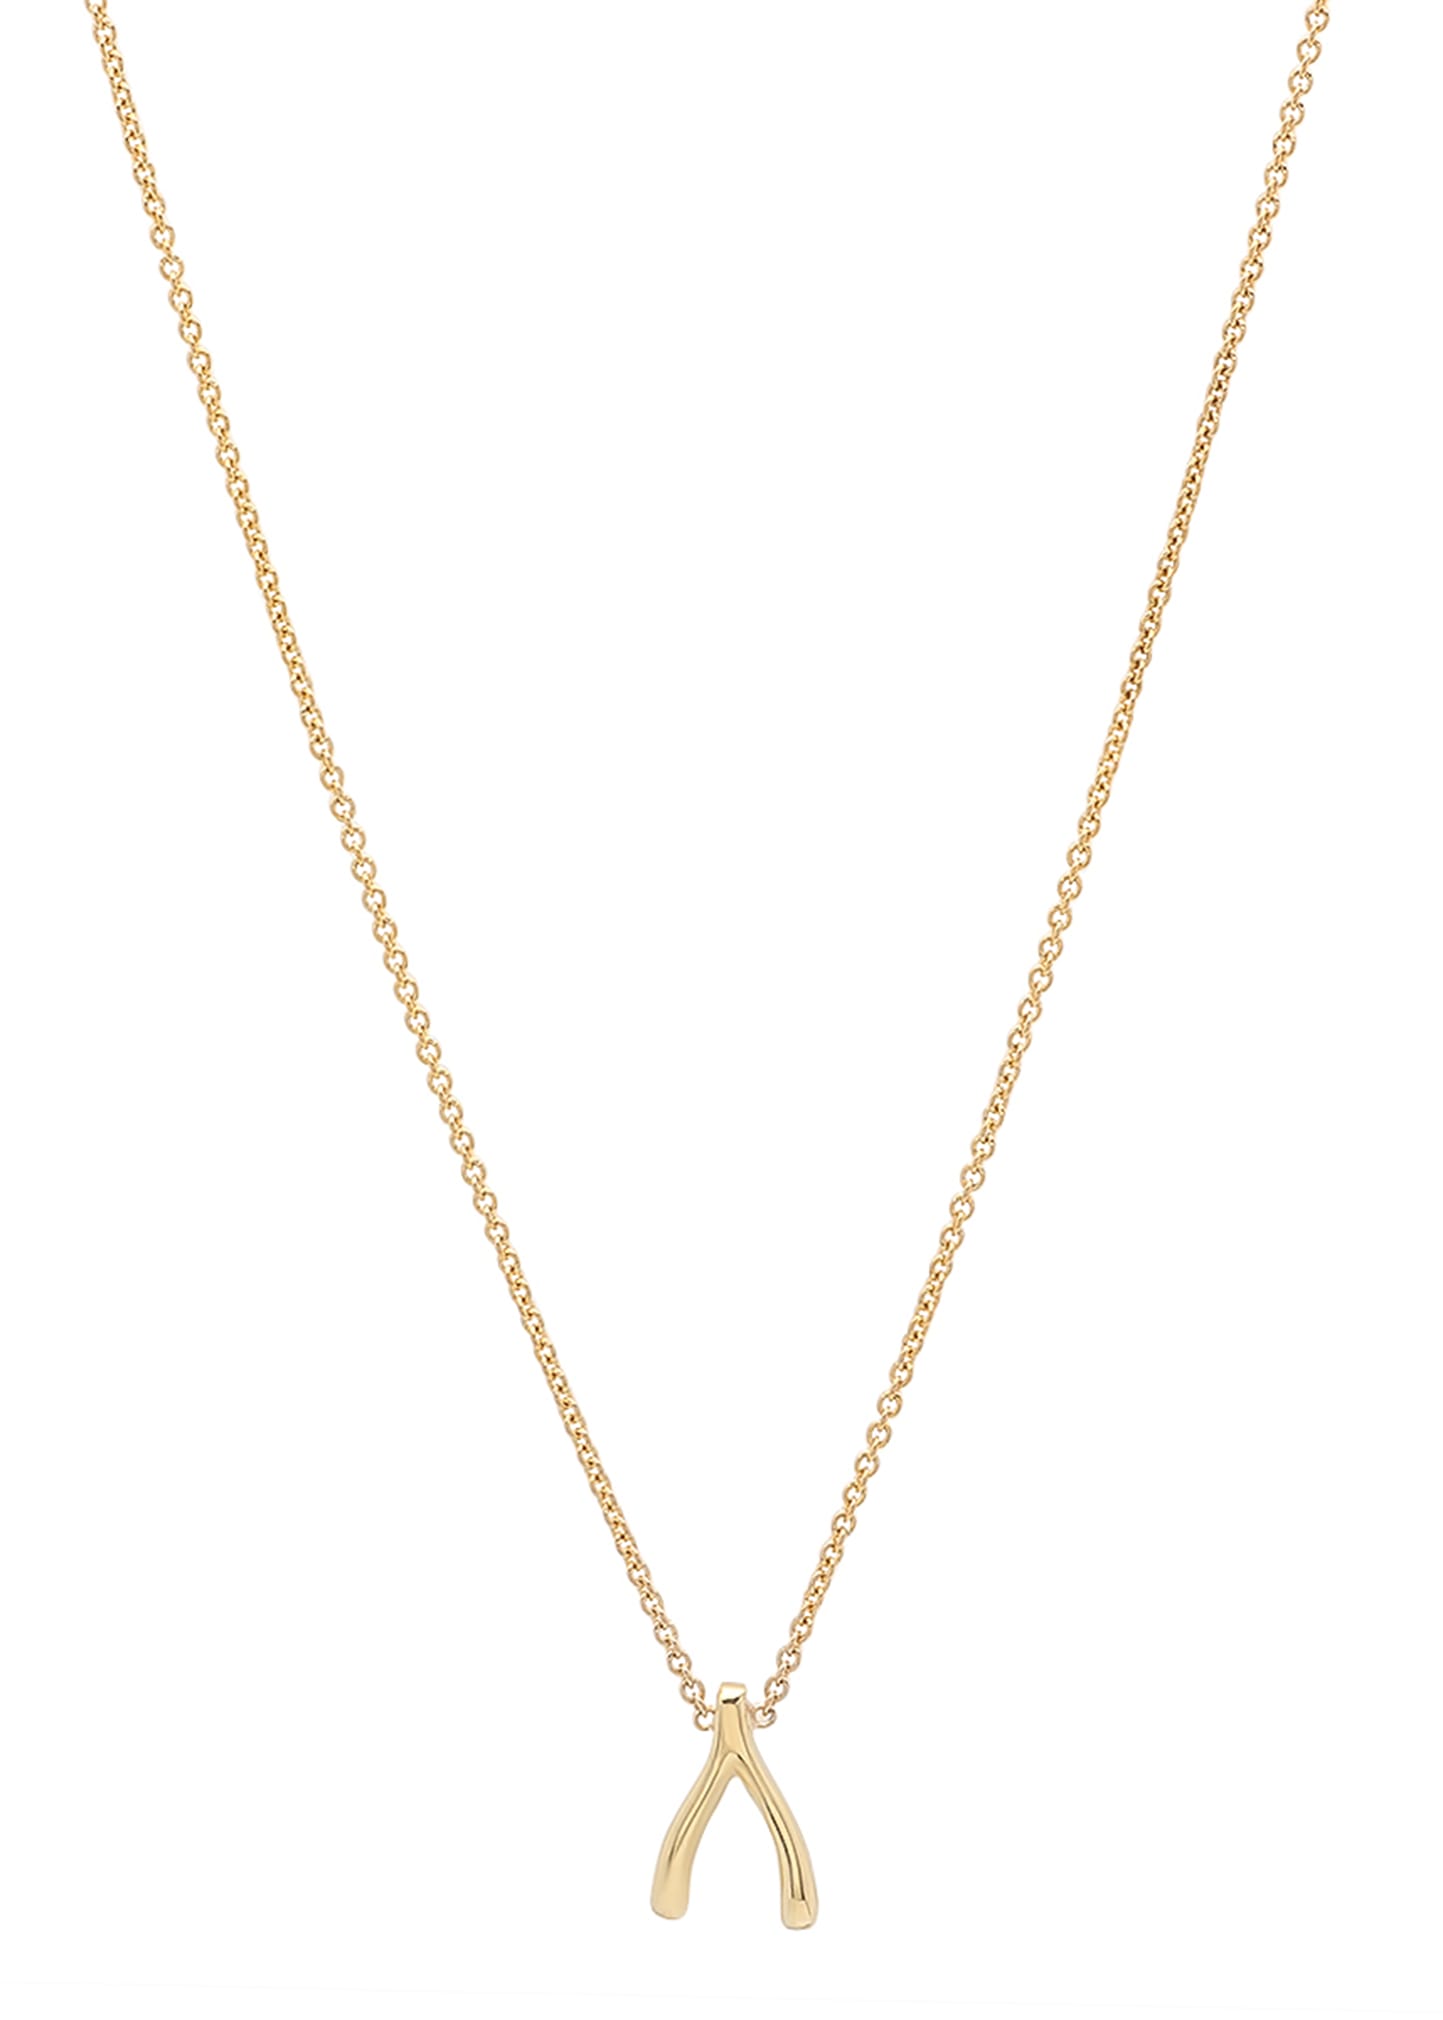 Jennifer Meyer 18k Yellow Gold Mini Wishbone Pendant Necklace On 14k Chain